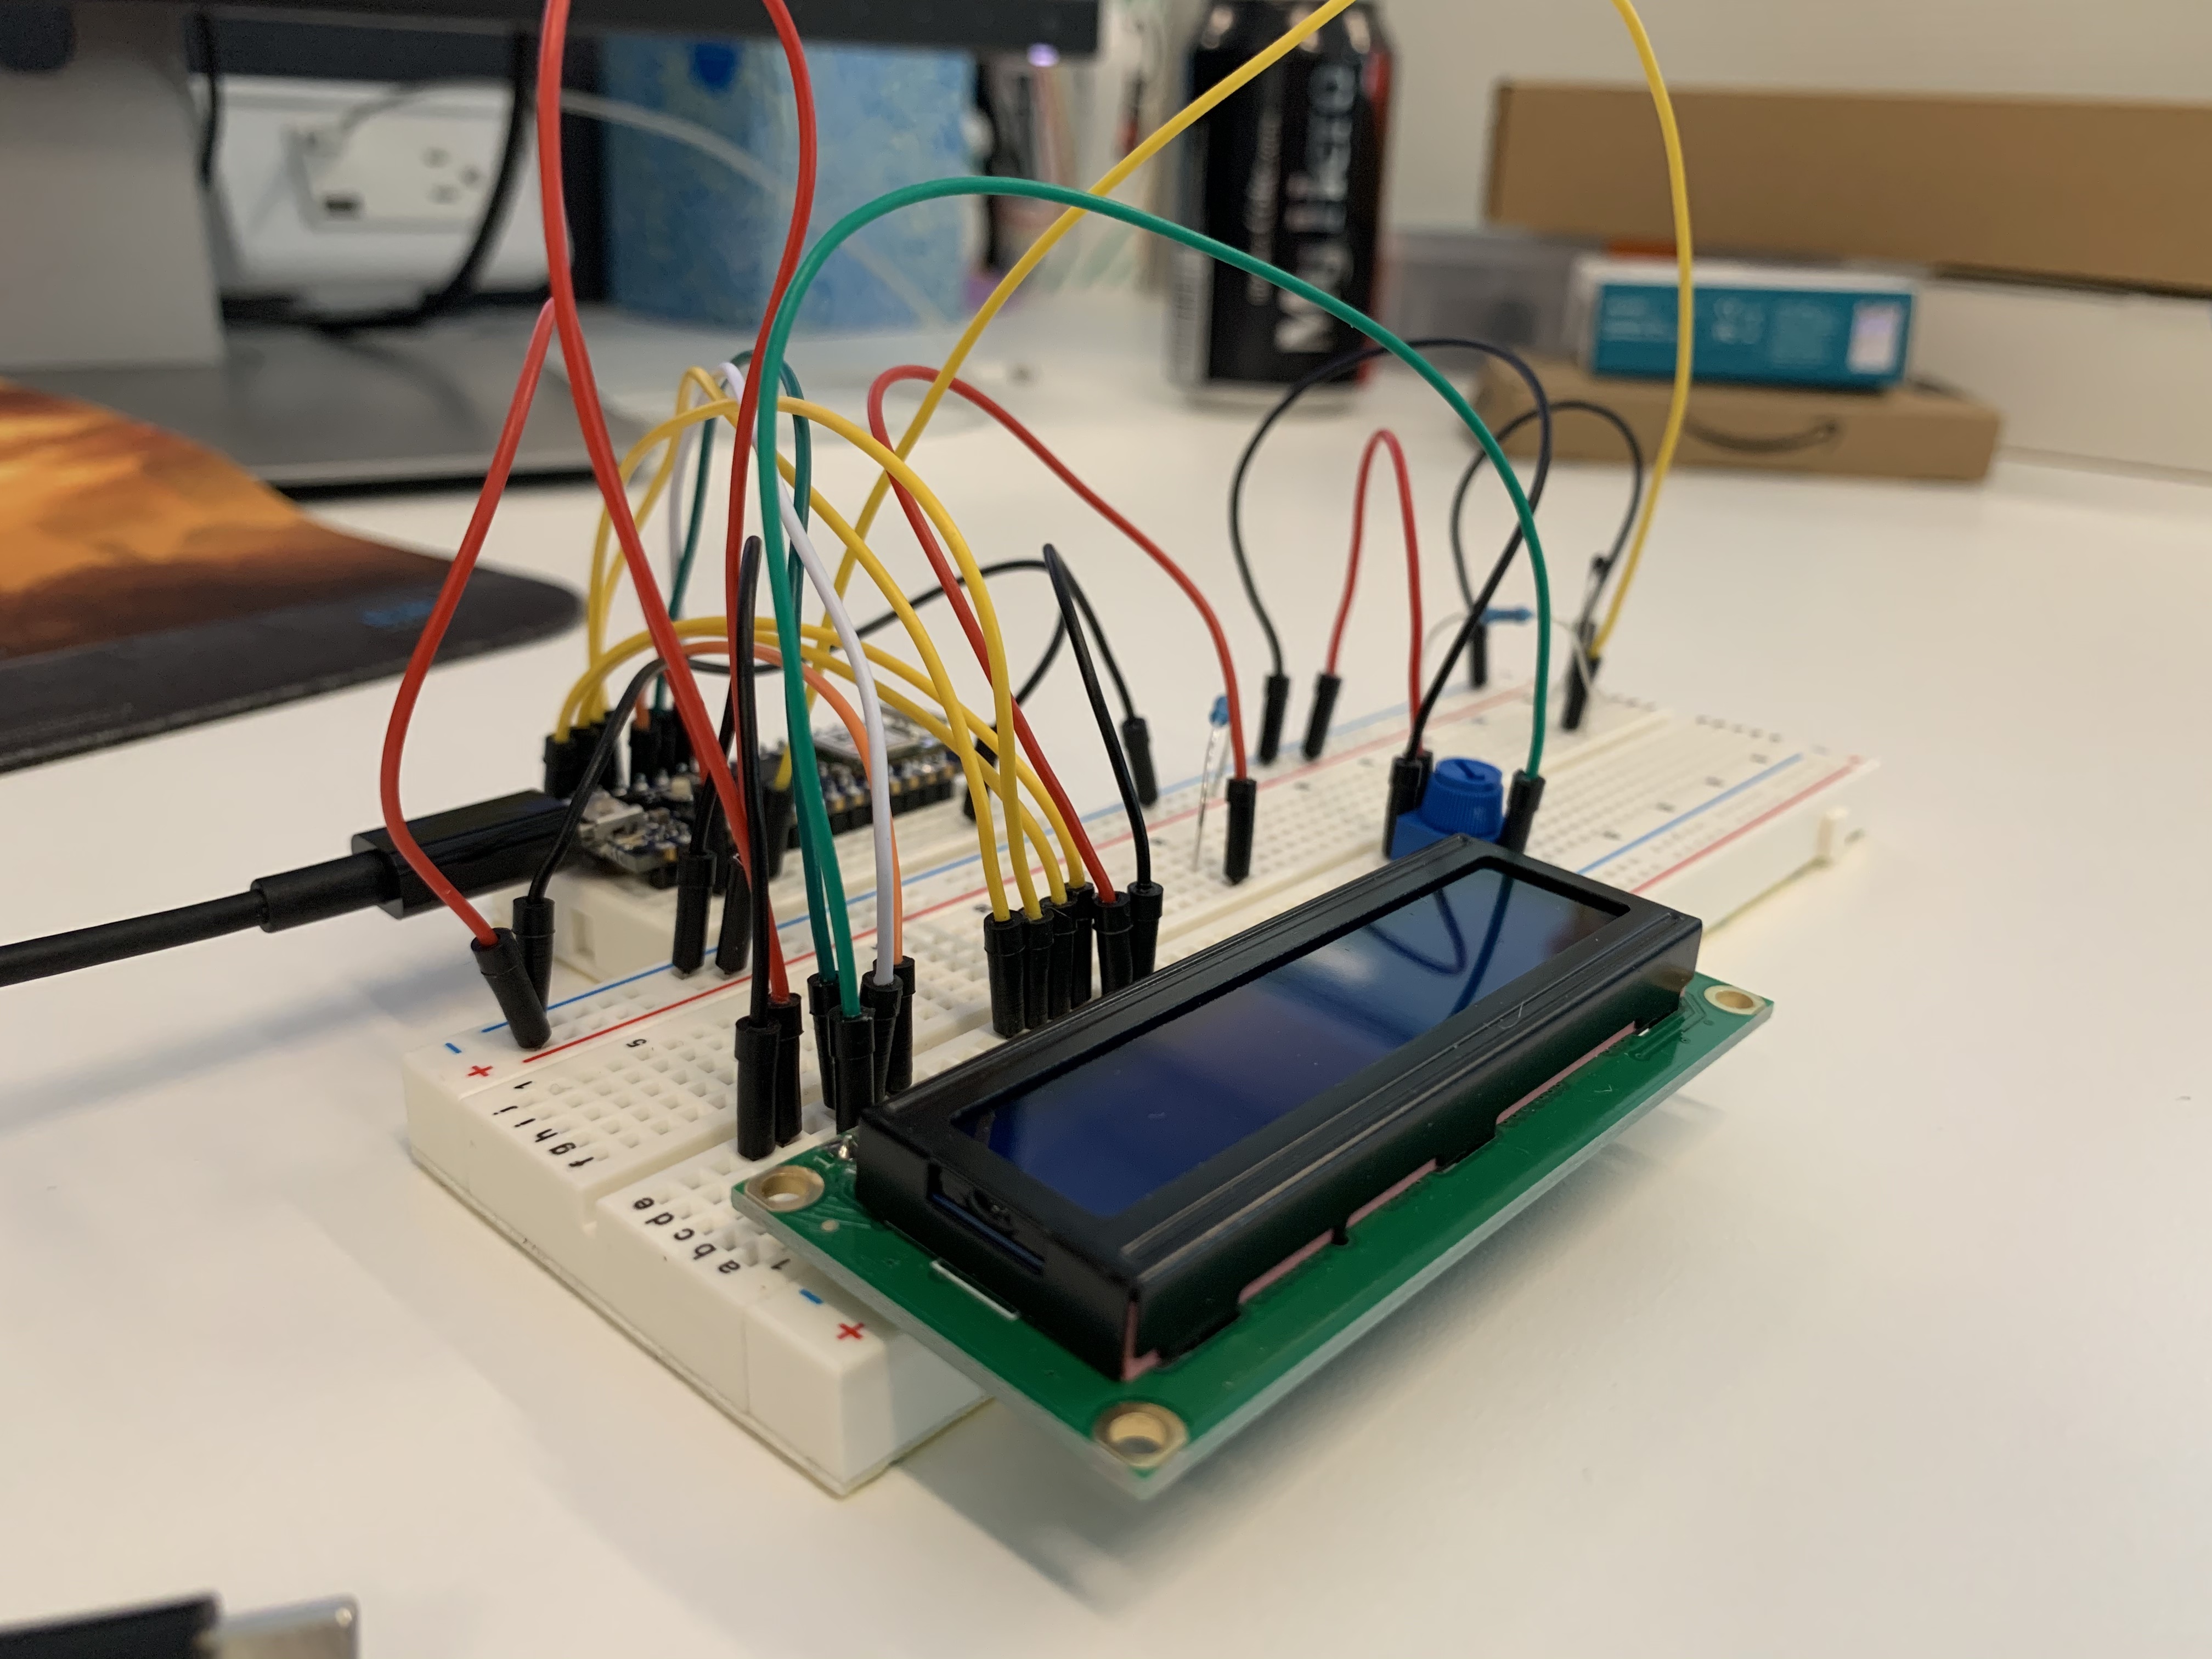 Hackathon: Using Go on an Arduino